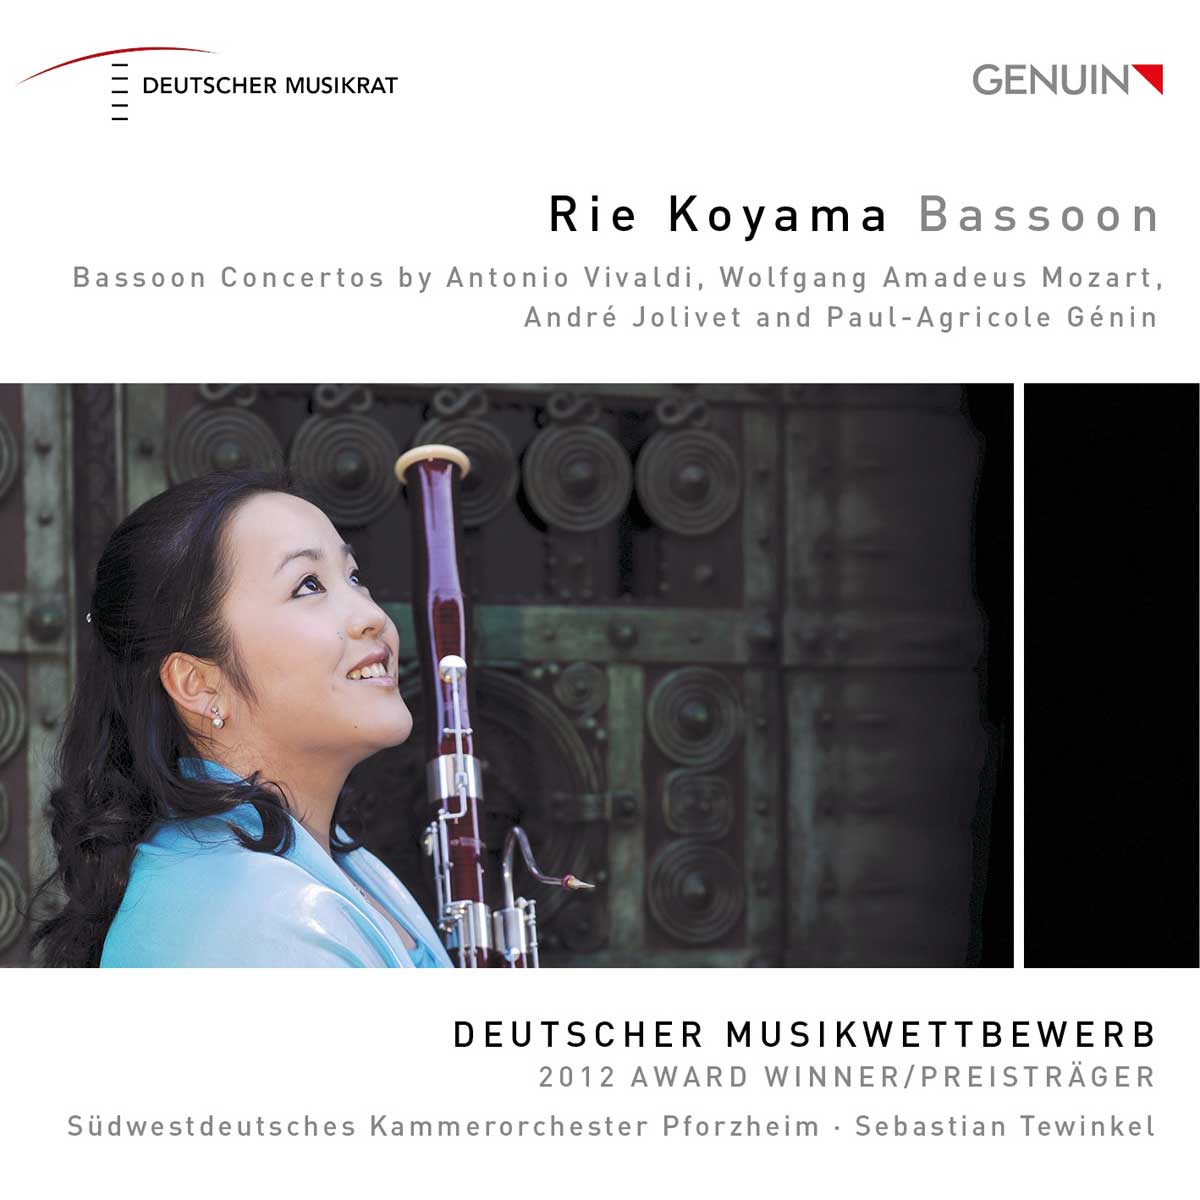 CD album cover 'Rie Koyama, Fagott' (GEN 13288) with Rie Koyama, S�dwestdeutsches Kammerorchester Pforzheim ...